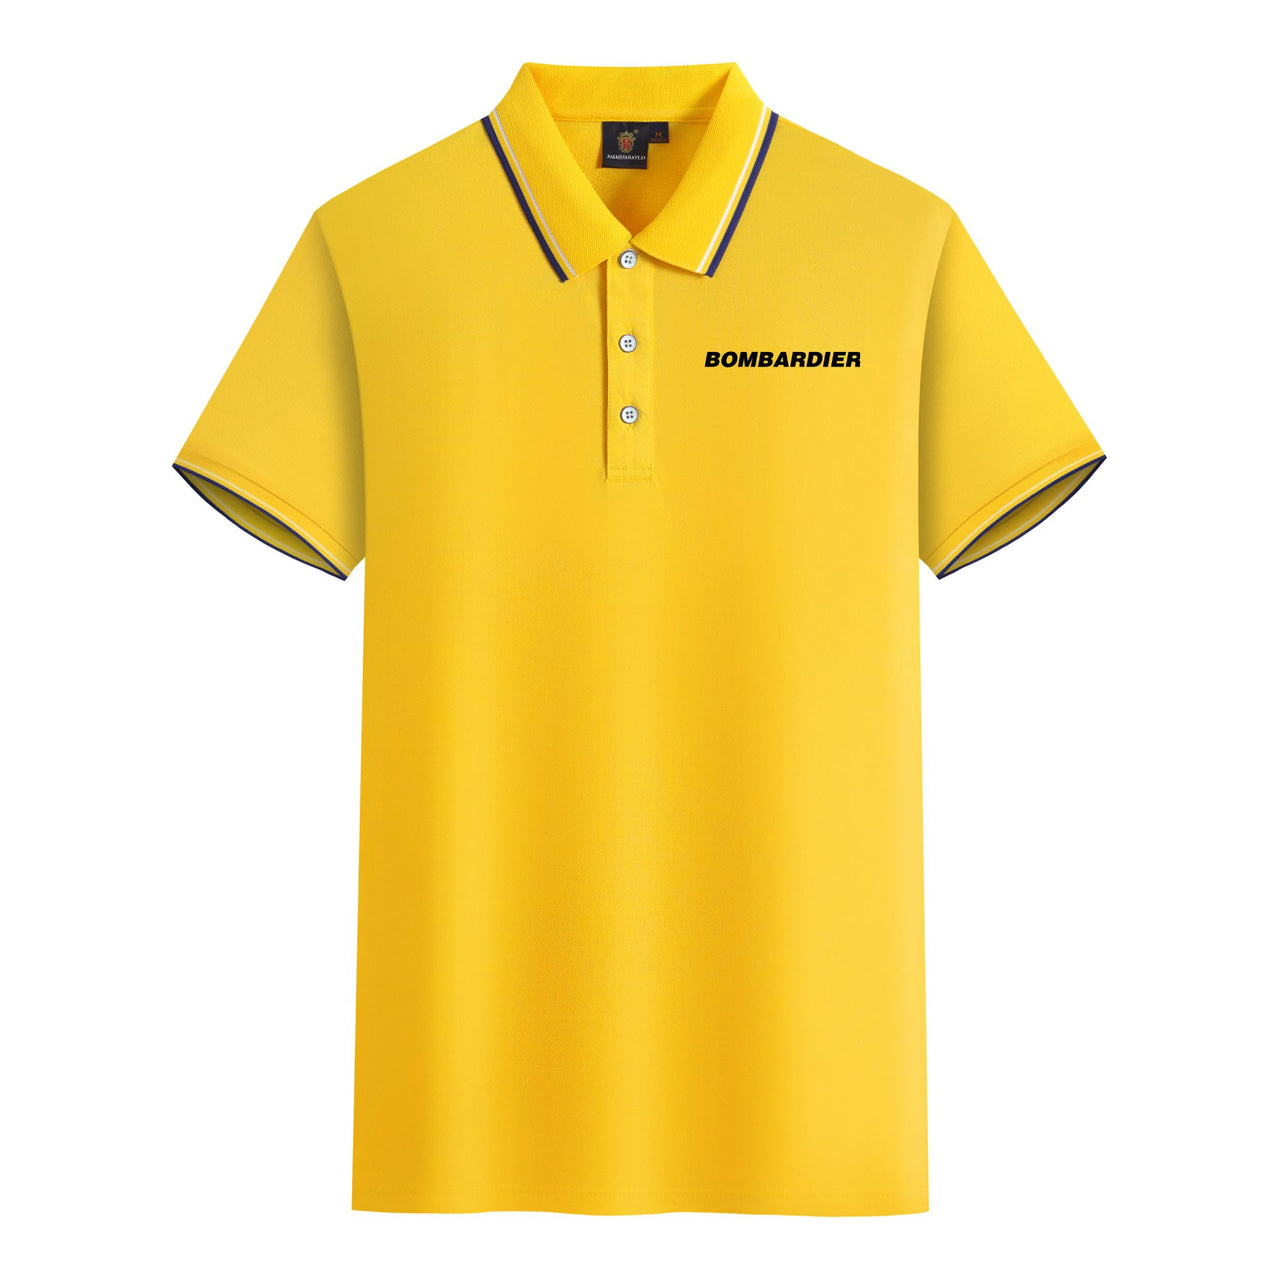 Bombardier & Text Designed Stylish Polo T-Shirts